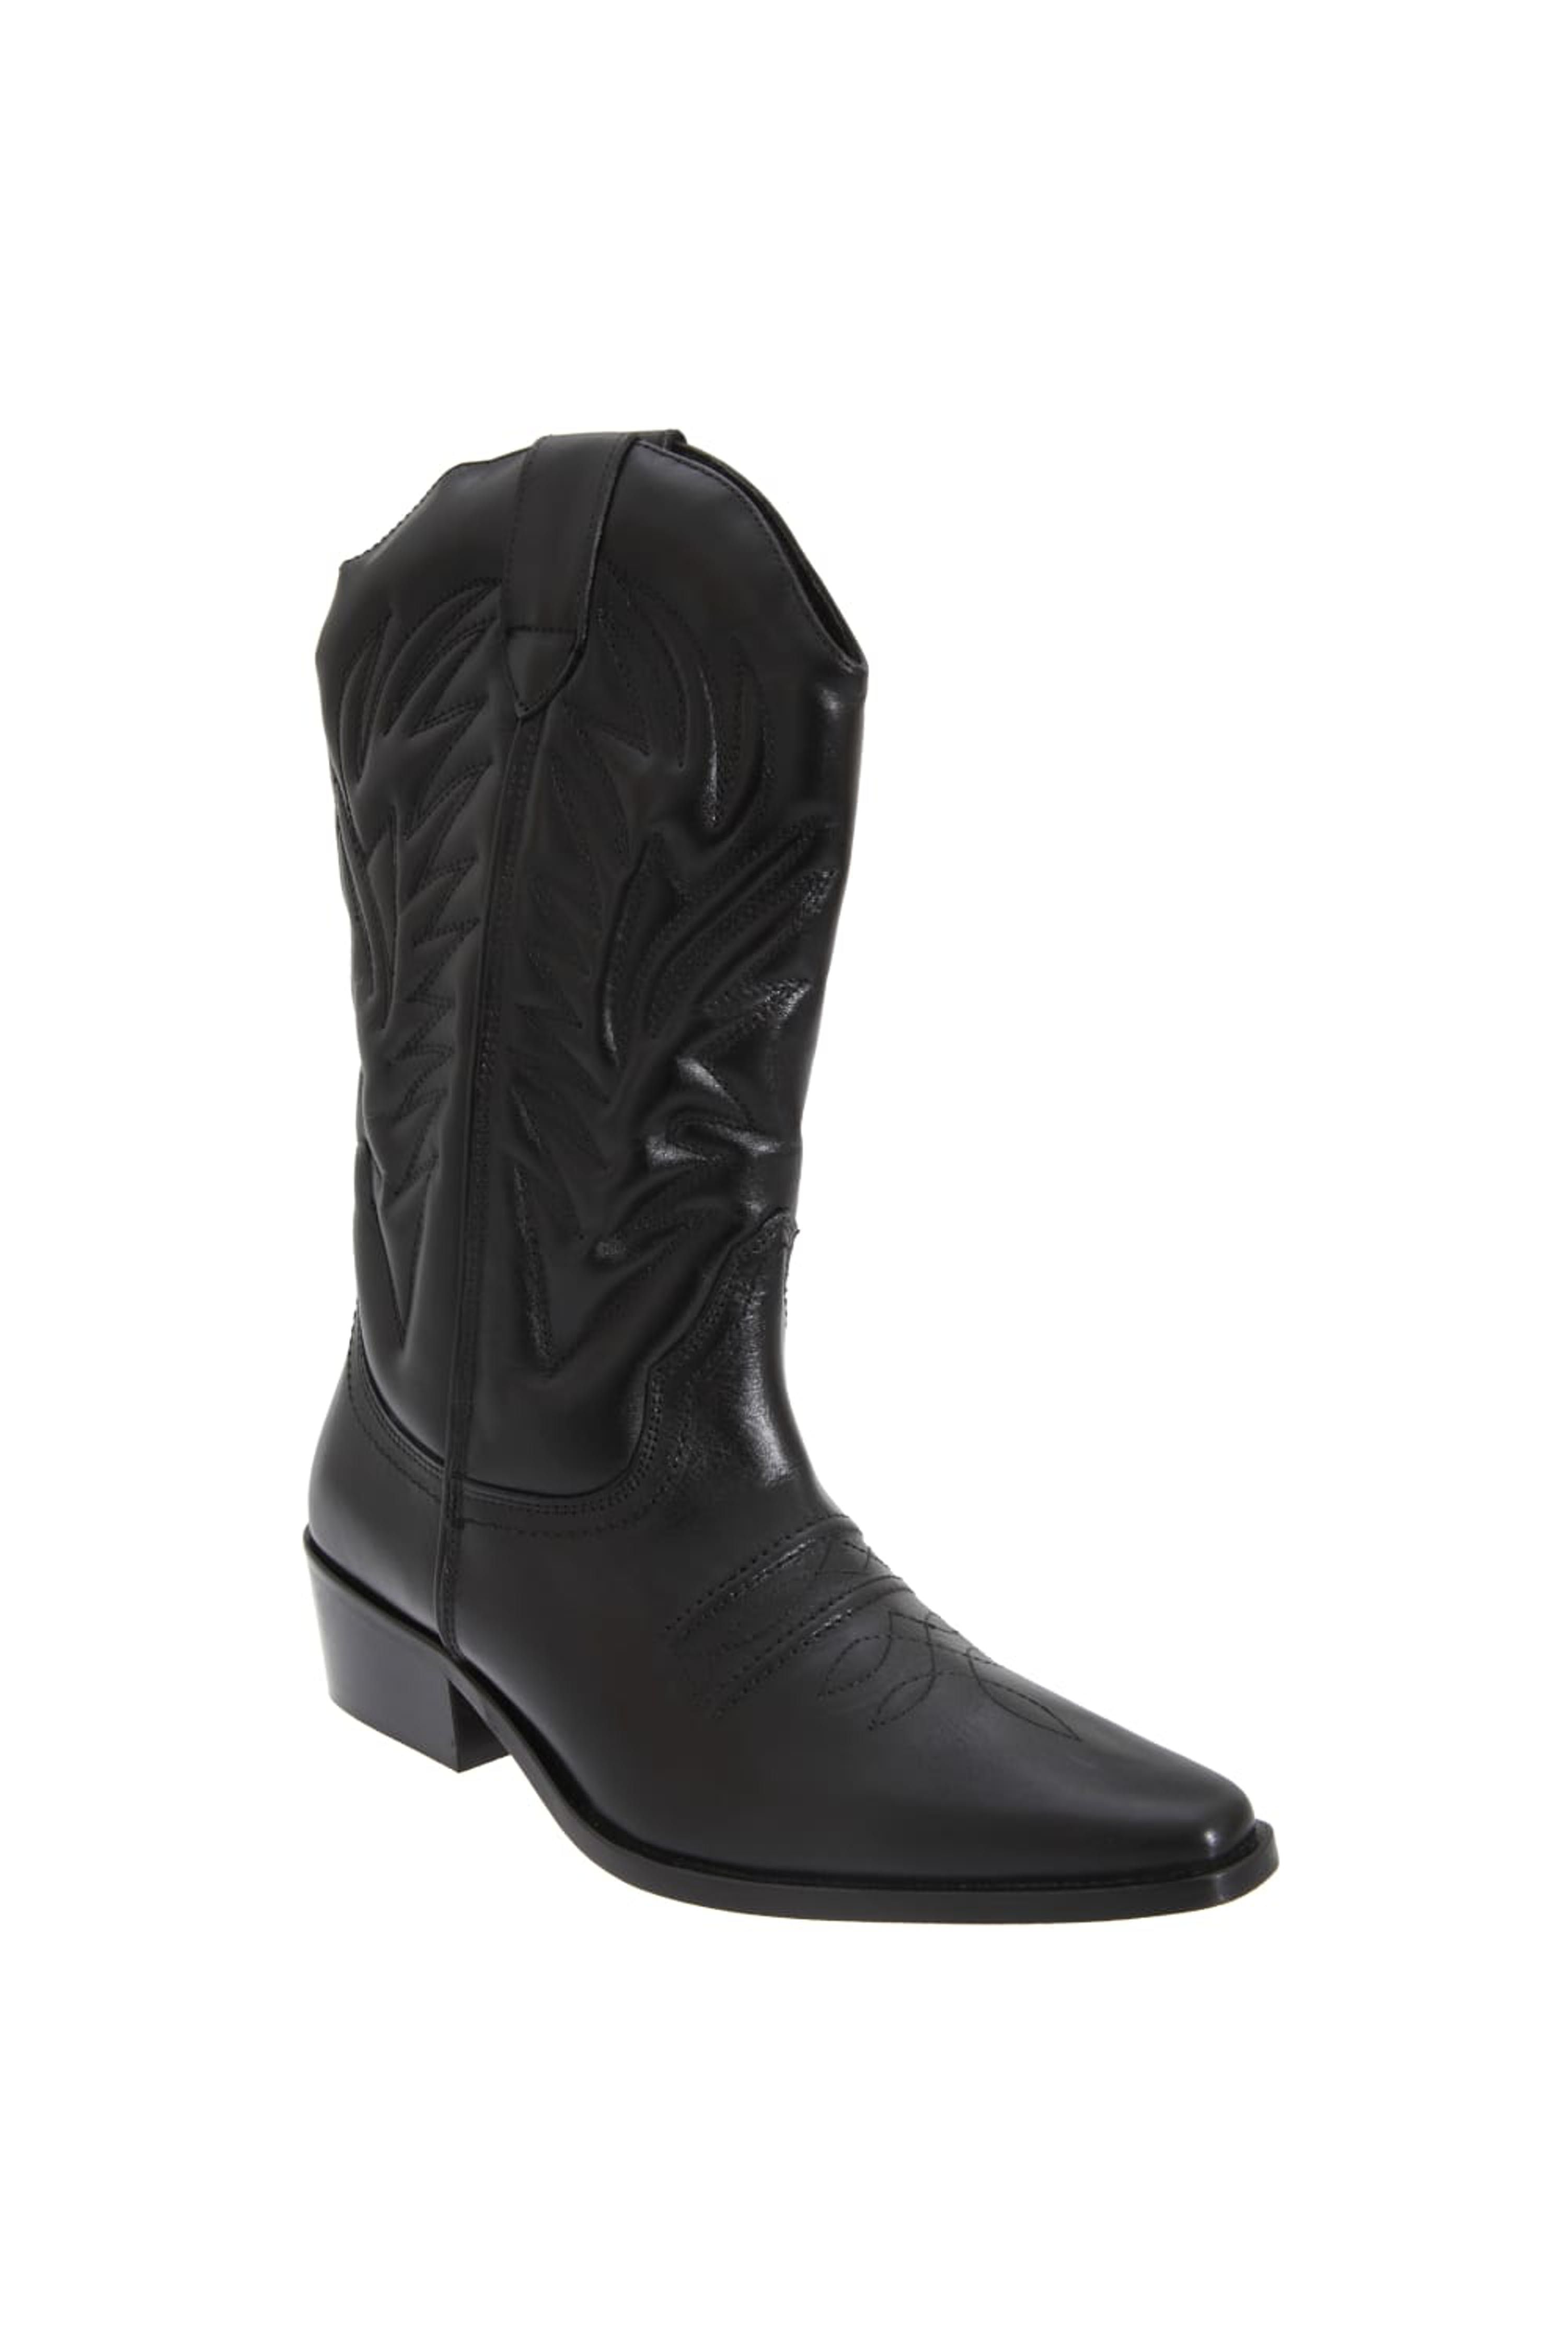 Woodland Mens High Clive Western Cowboy Boots (Black) - 7 - Also in: 13, 8, 12, 11, 9, 10 | Verishop